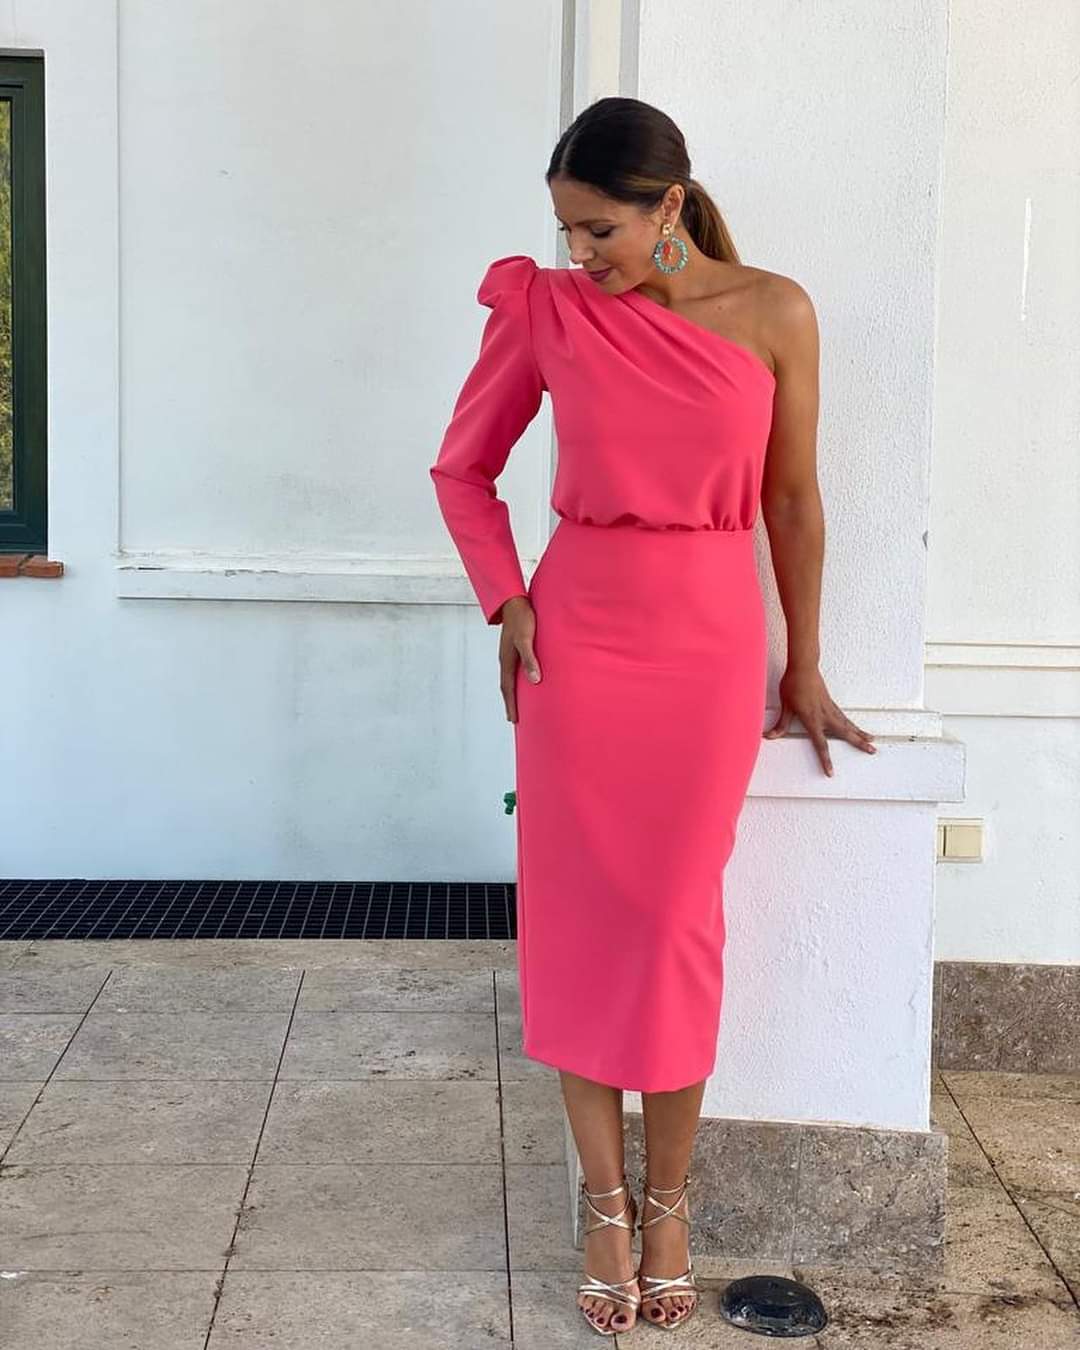 Margarita Munoz Coral Dress 